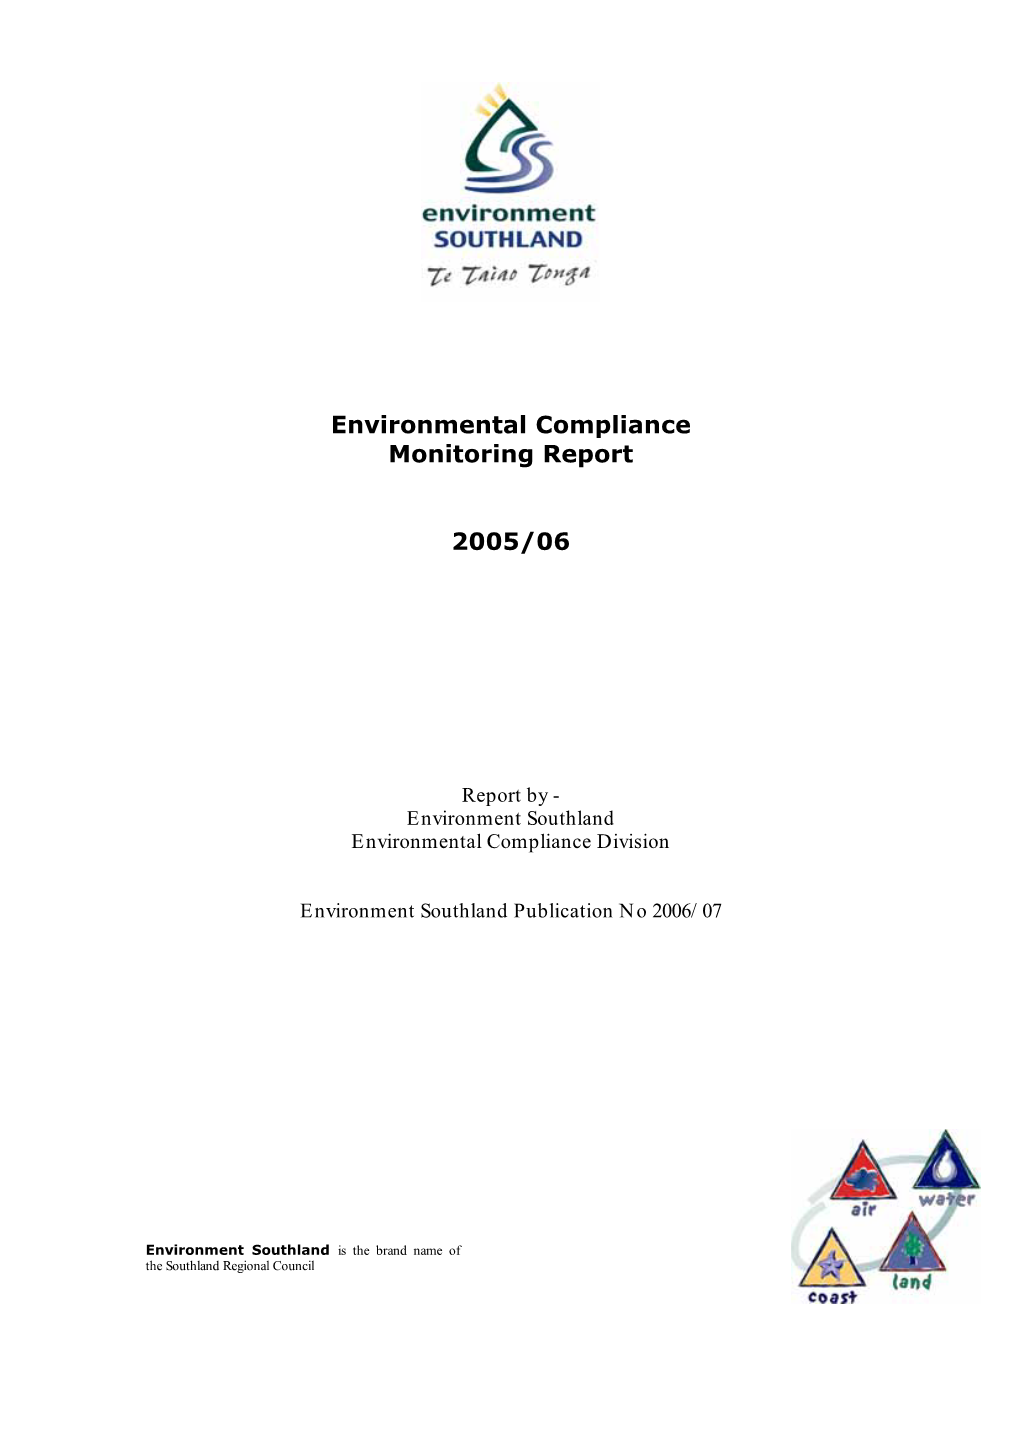 Environmental Compliance Monitoring Report 2005/06